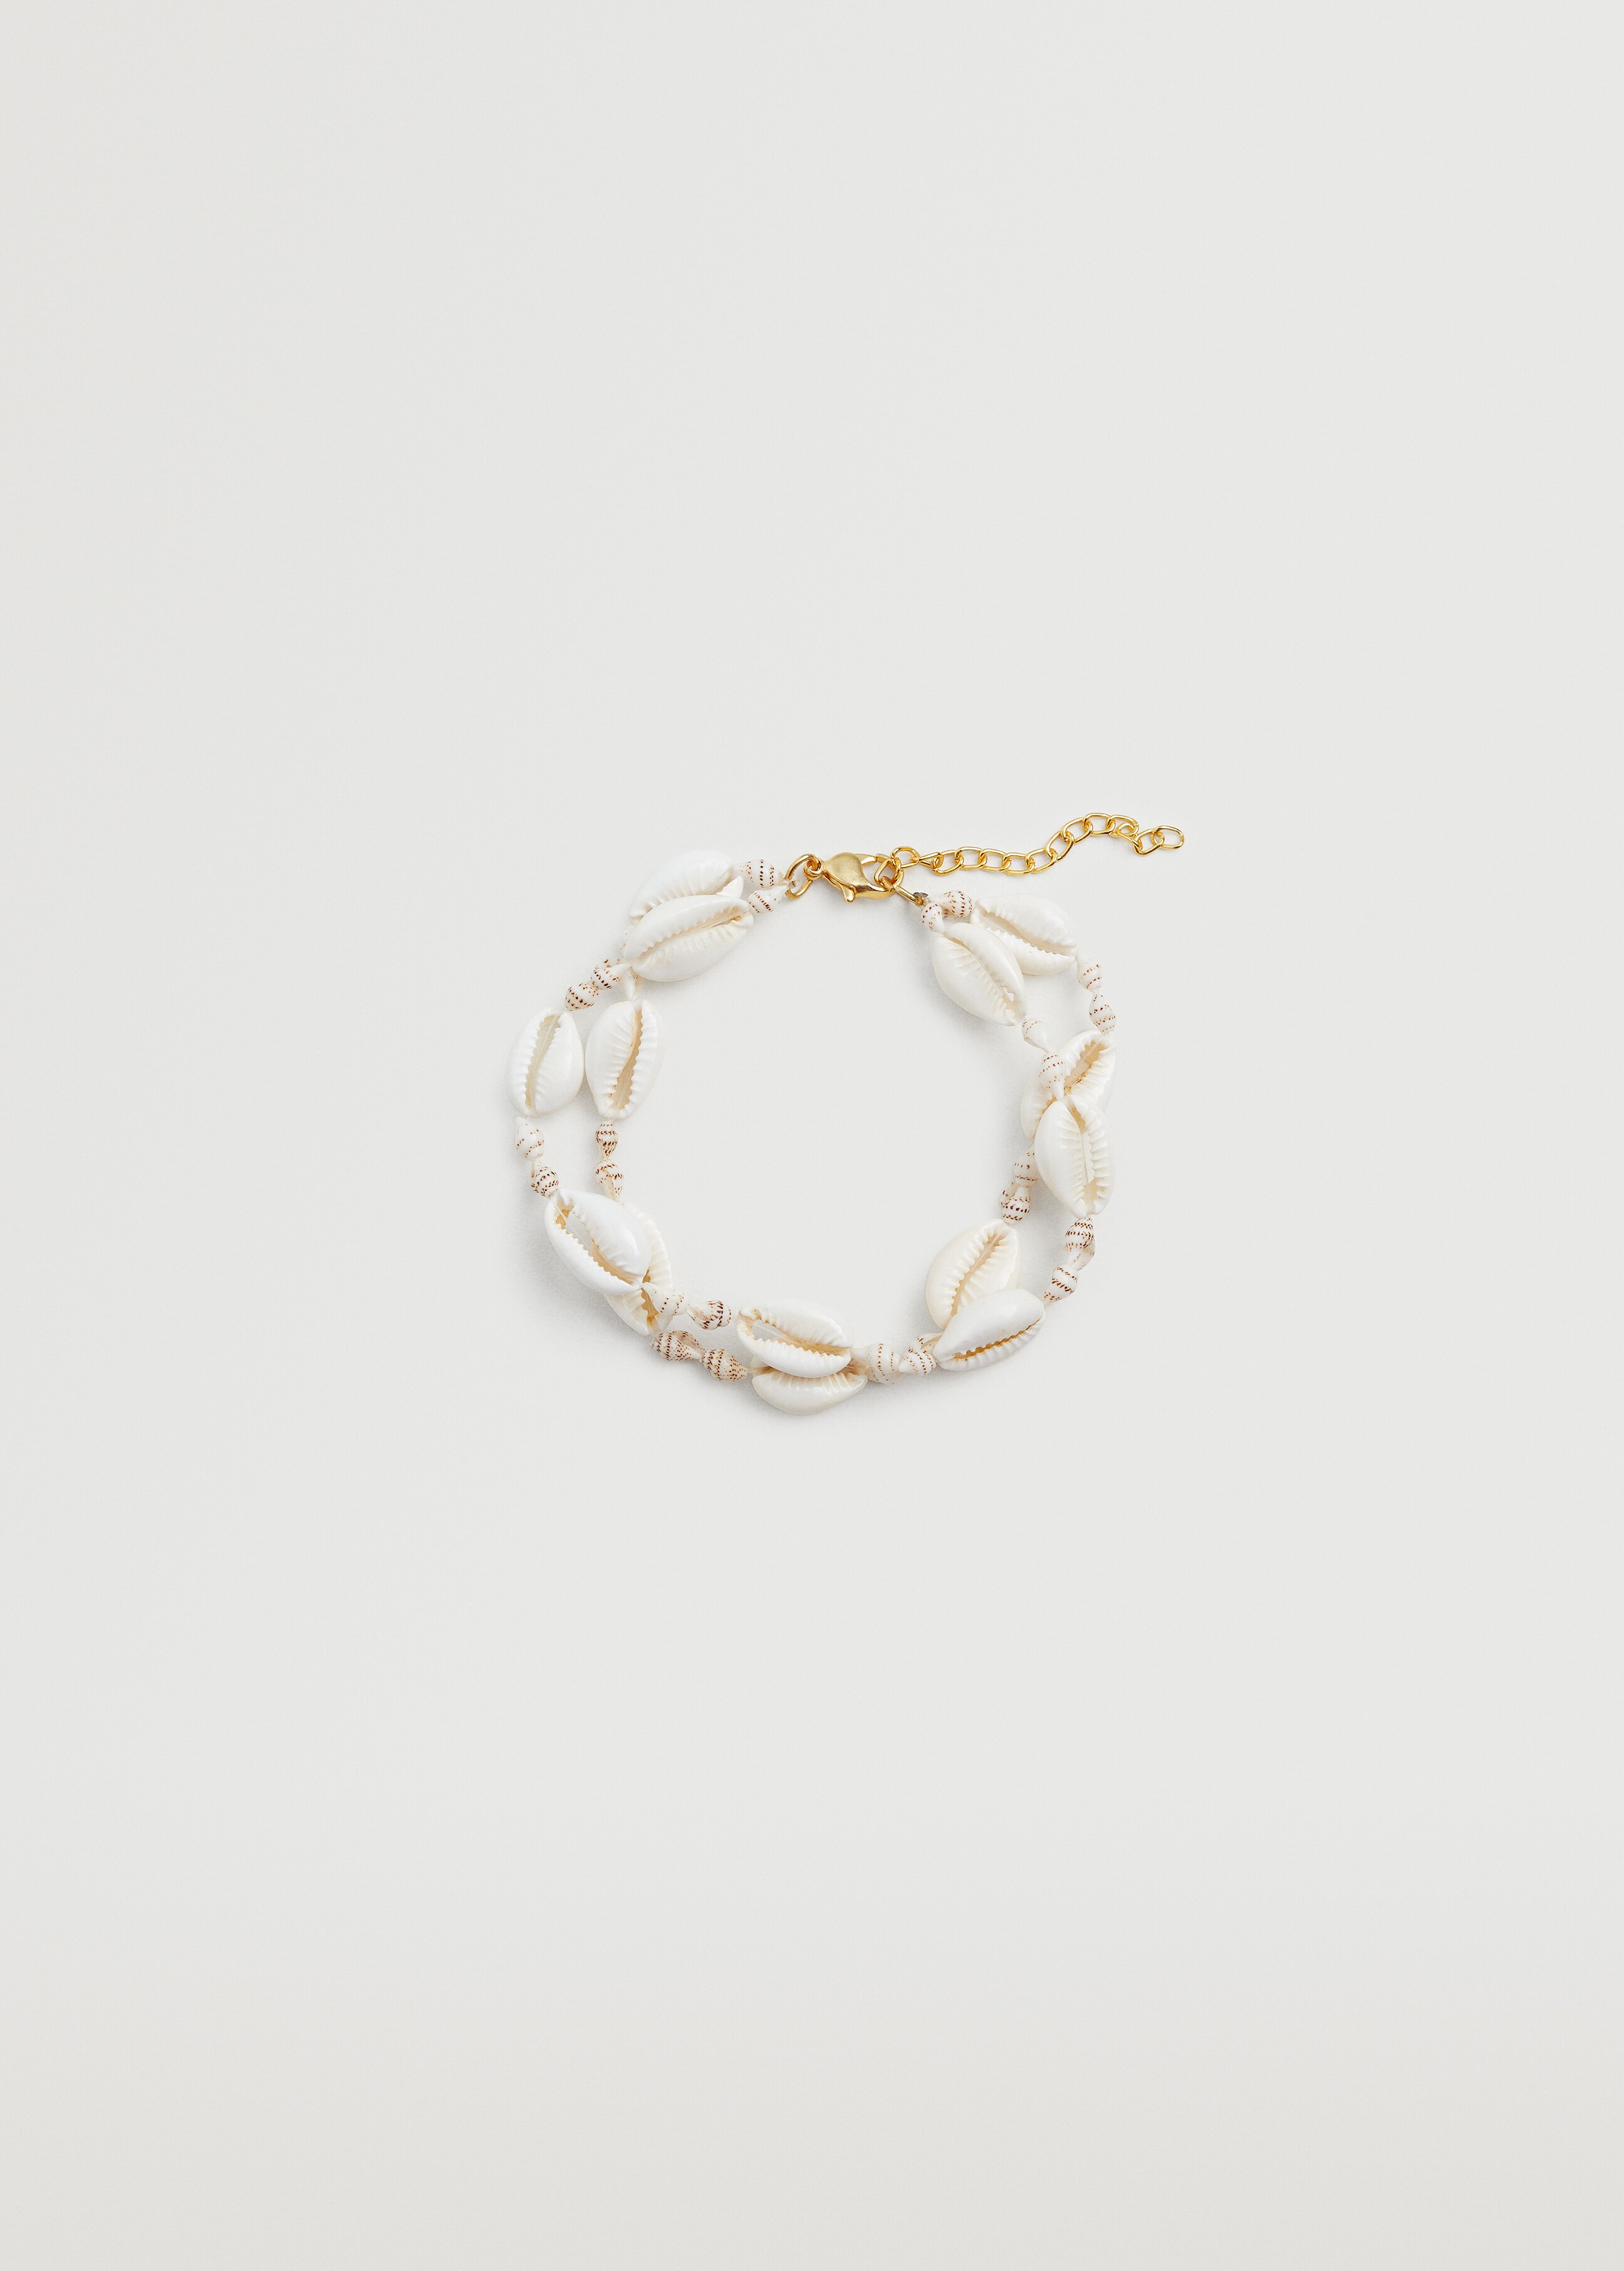 Seashell anklet bracelet - Article without model